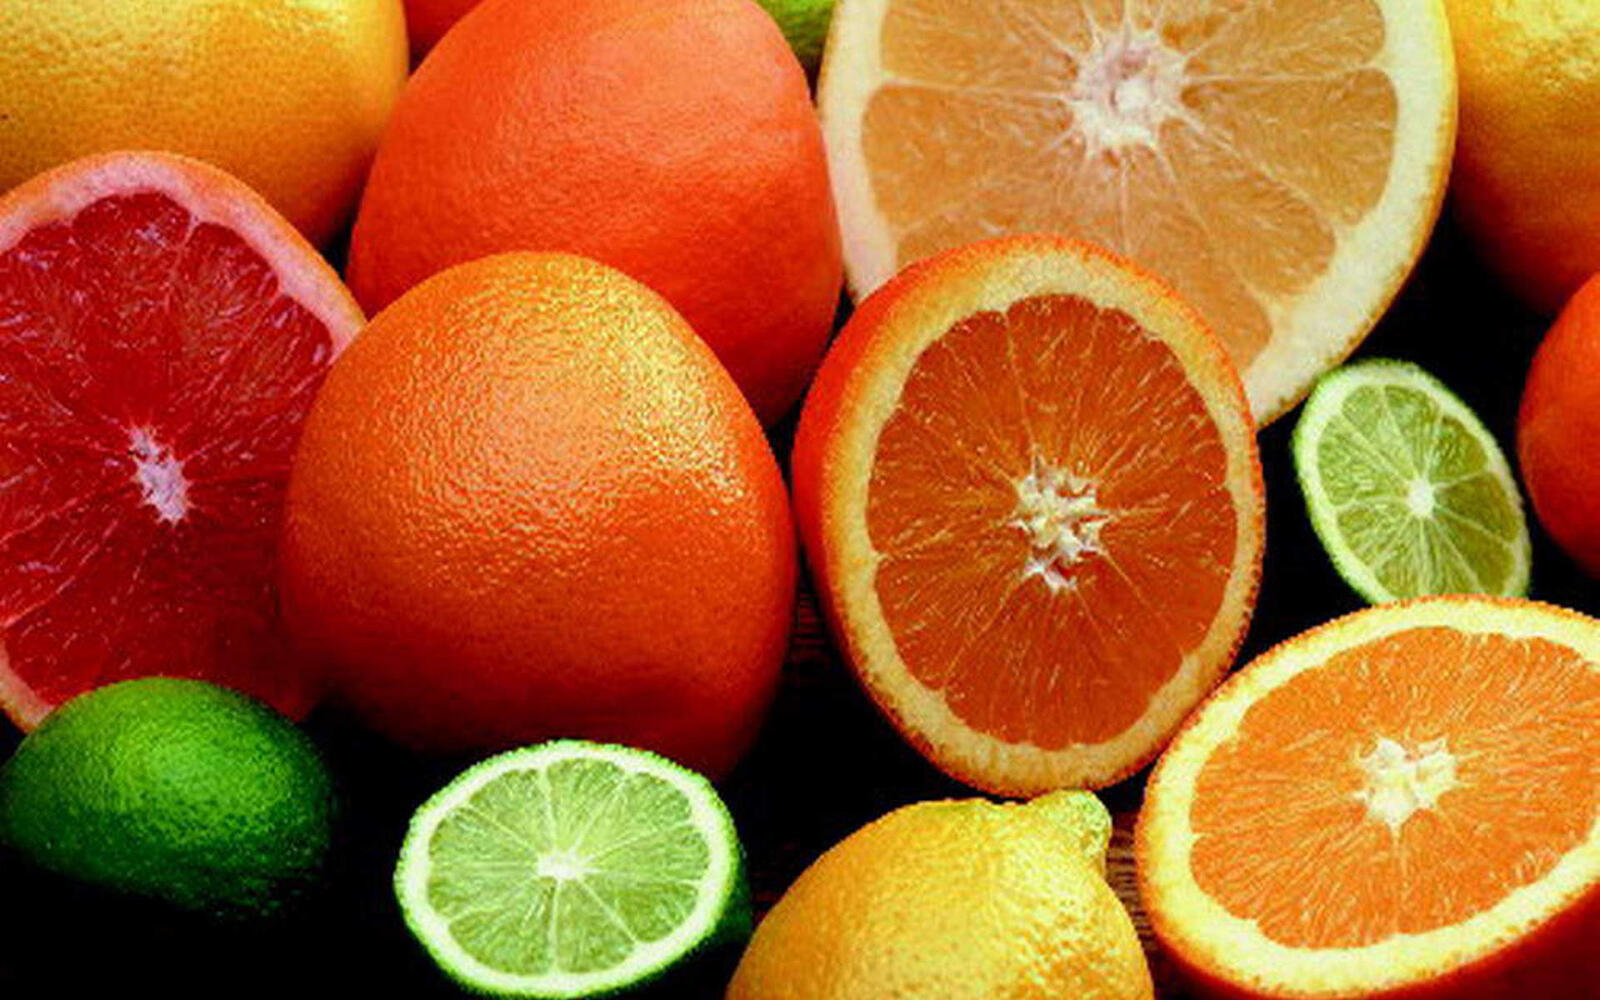 Wallpapers oranges lemons lime on the desktop